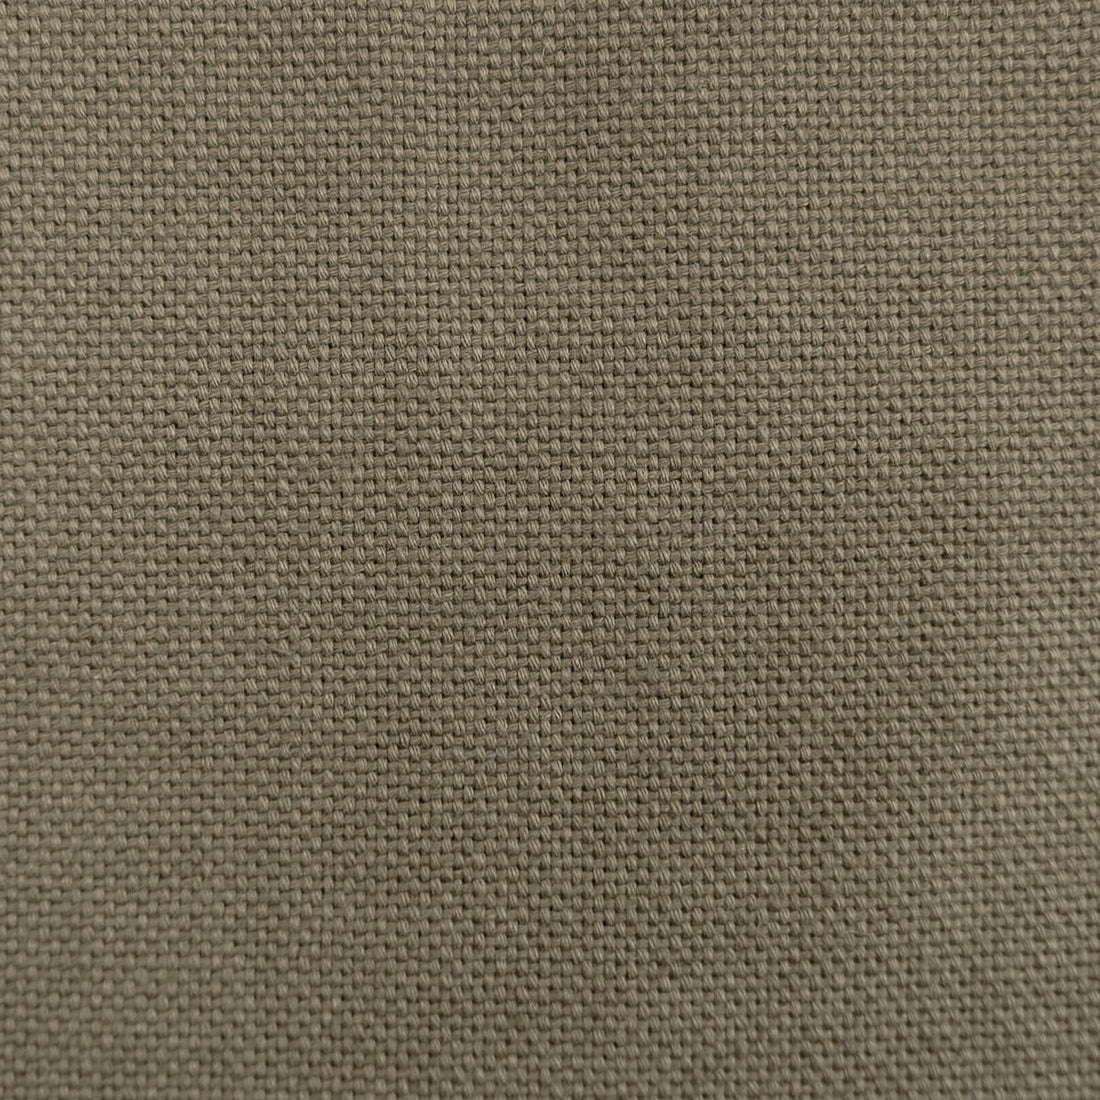 Dobra fabric in lino color - pattern LCT1075.004.0 - by Gaston y Daniela in the Lorenzo Castillo VII The Rectory collection